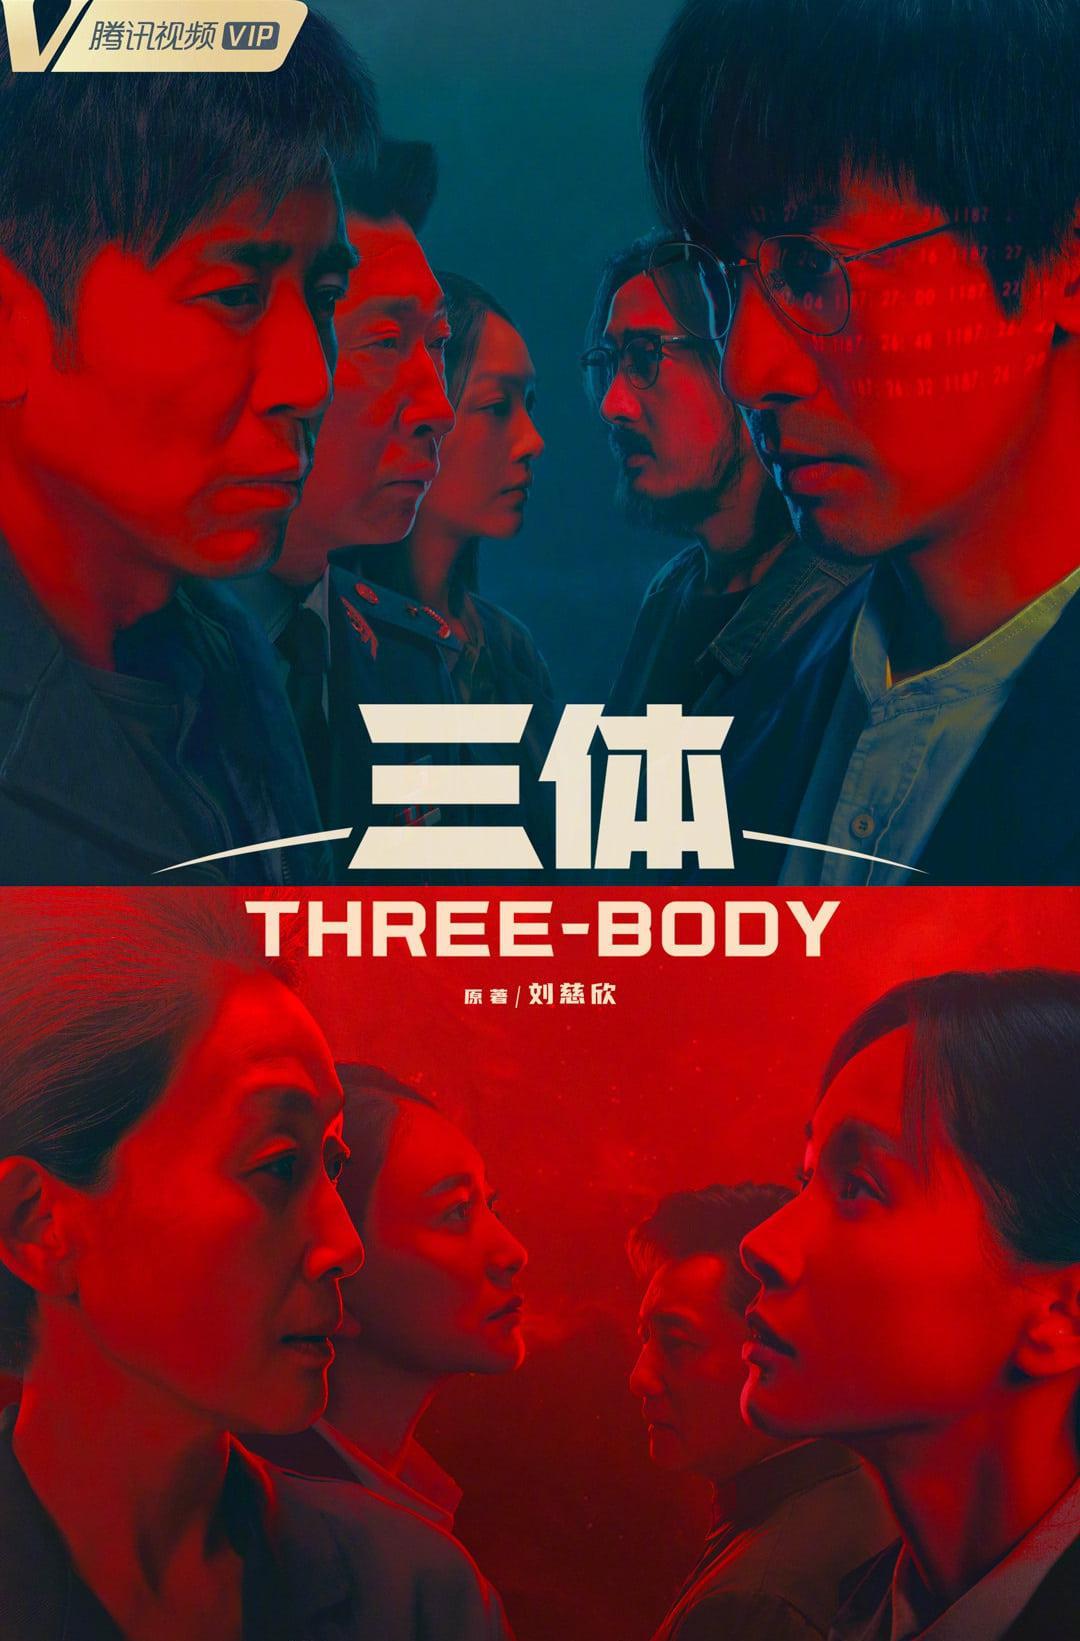 TV ratings for Three-Body (三体) in Australia. Tencent Video TV series